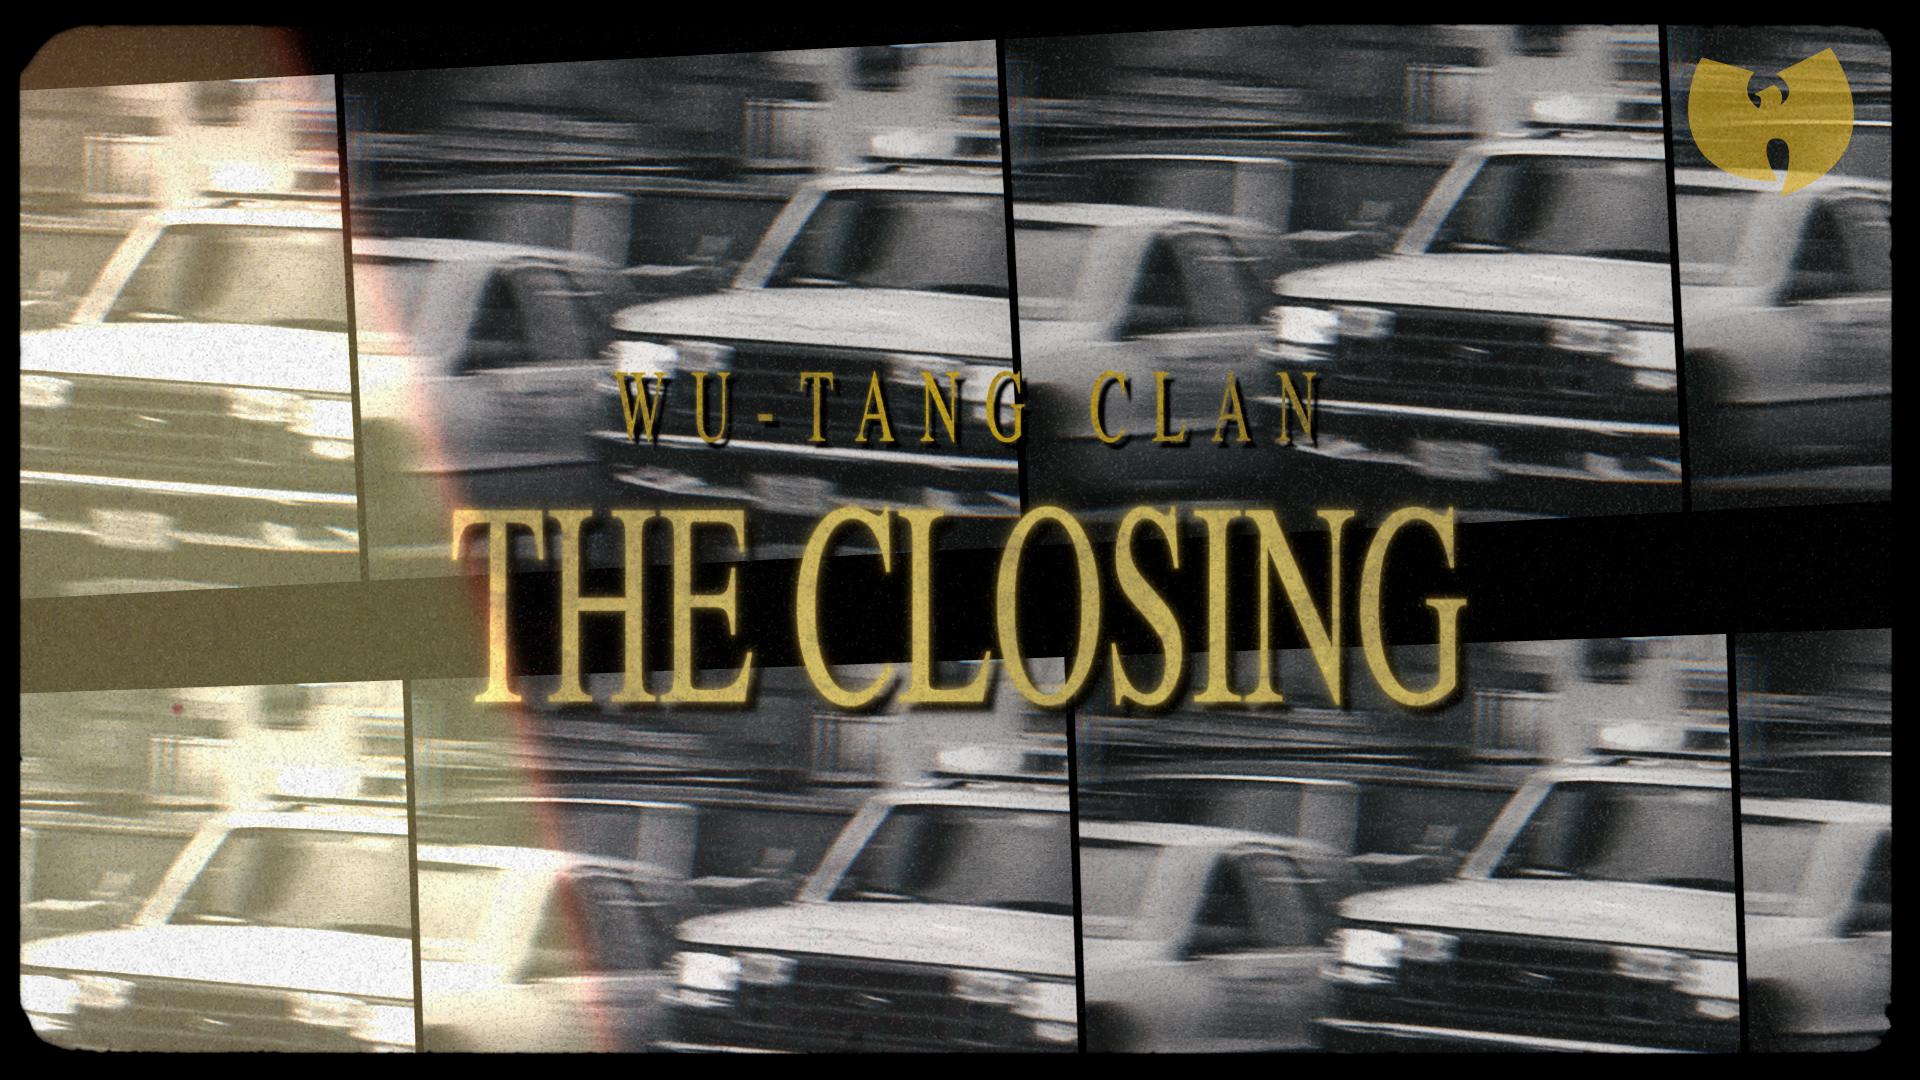 Wu-Tang Clan - The Closing (Visual Playlist)